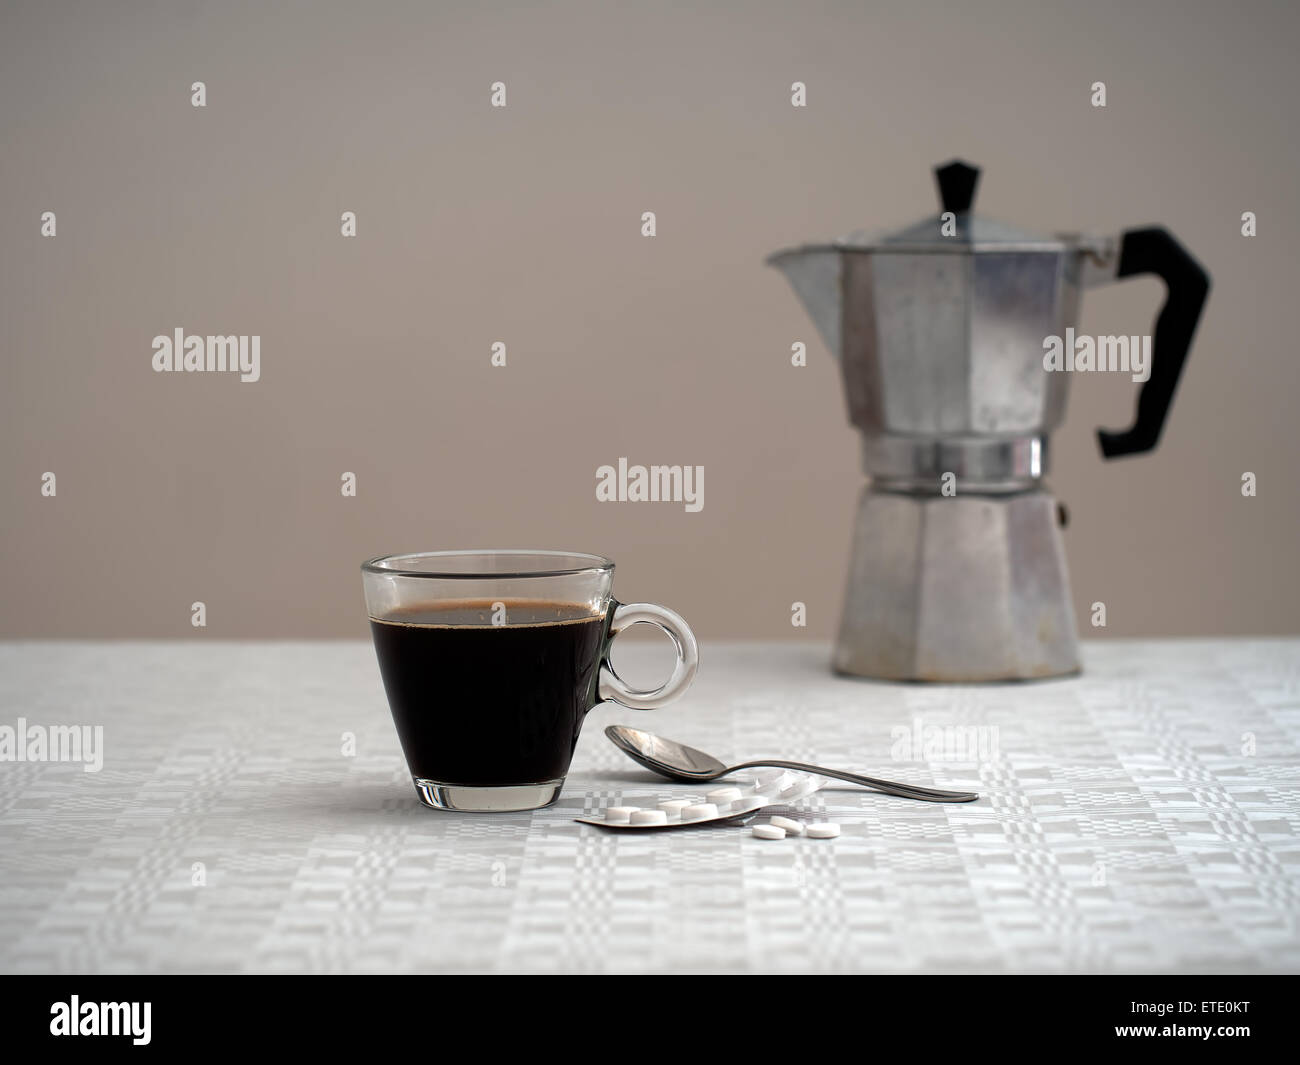 Lonely misera colazione - caffè e aspirina. Depressione forse Foto stock -  Alamy